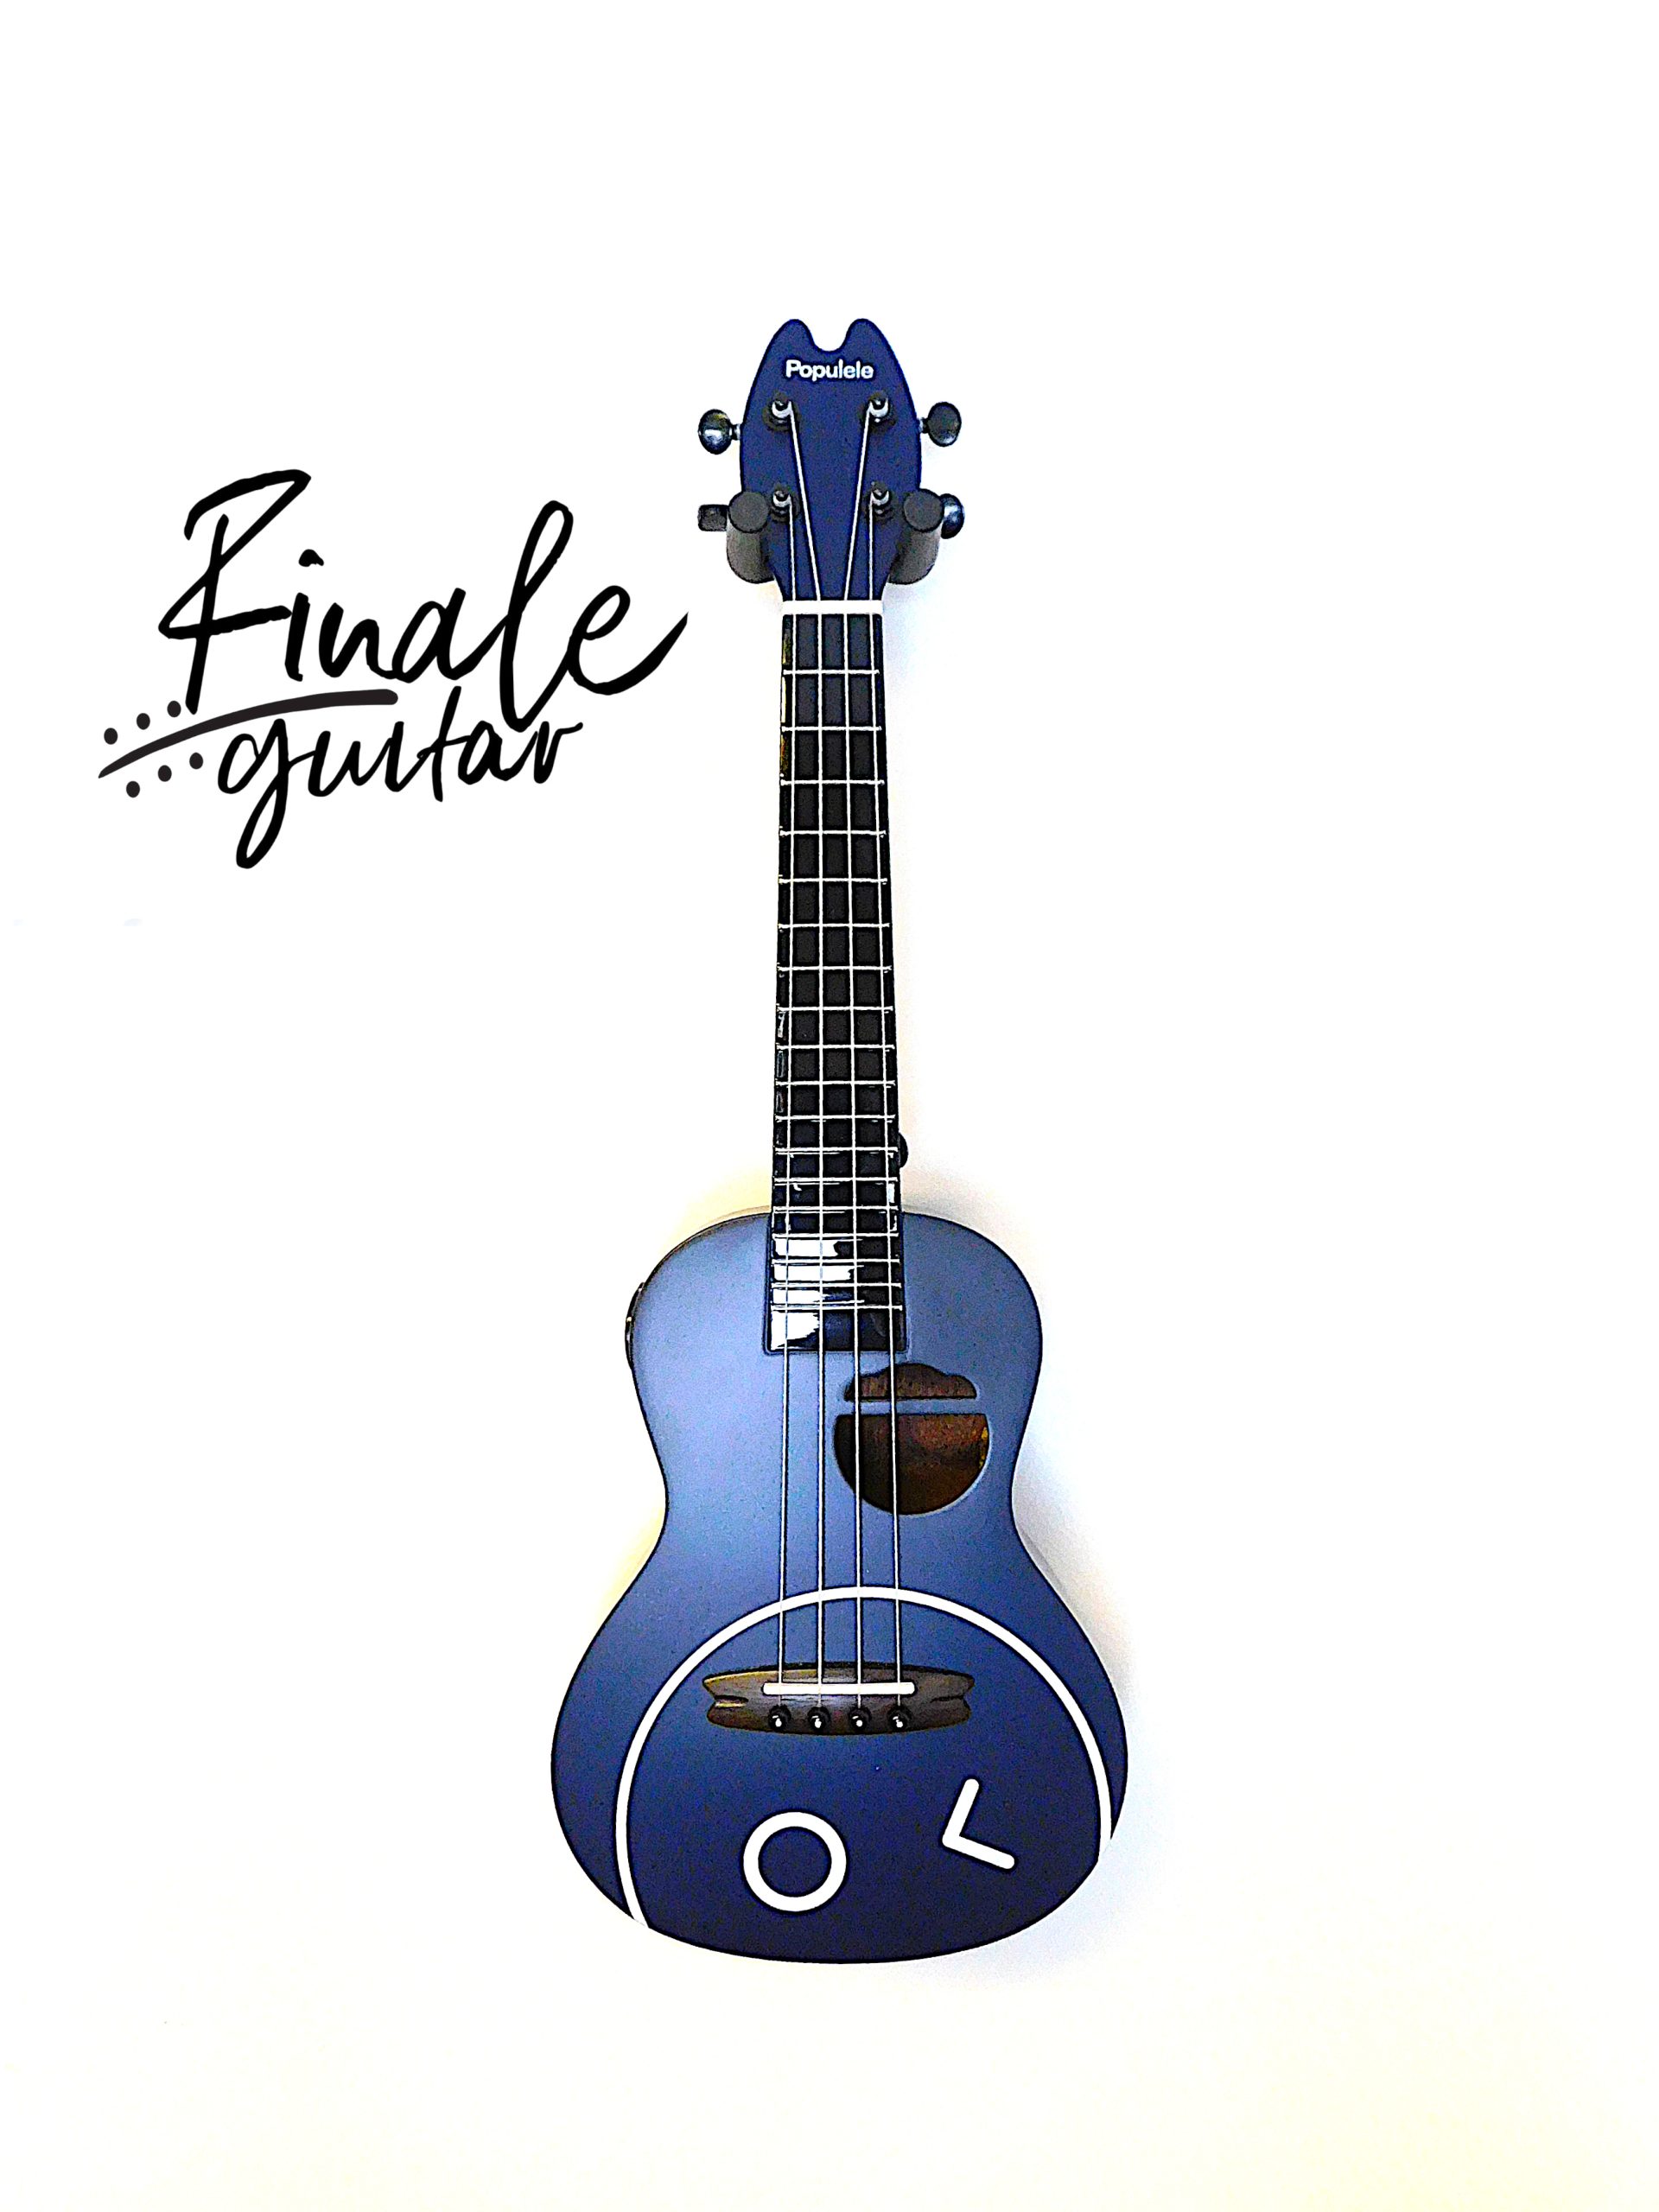 Populele smart uke for sale in our Sheffield guitar shop, Finale Guitar